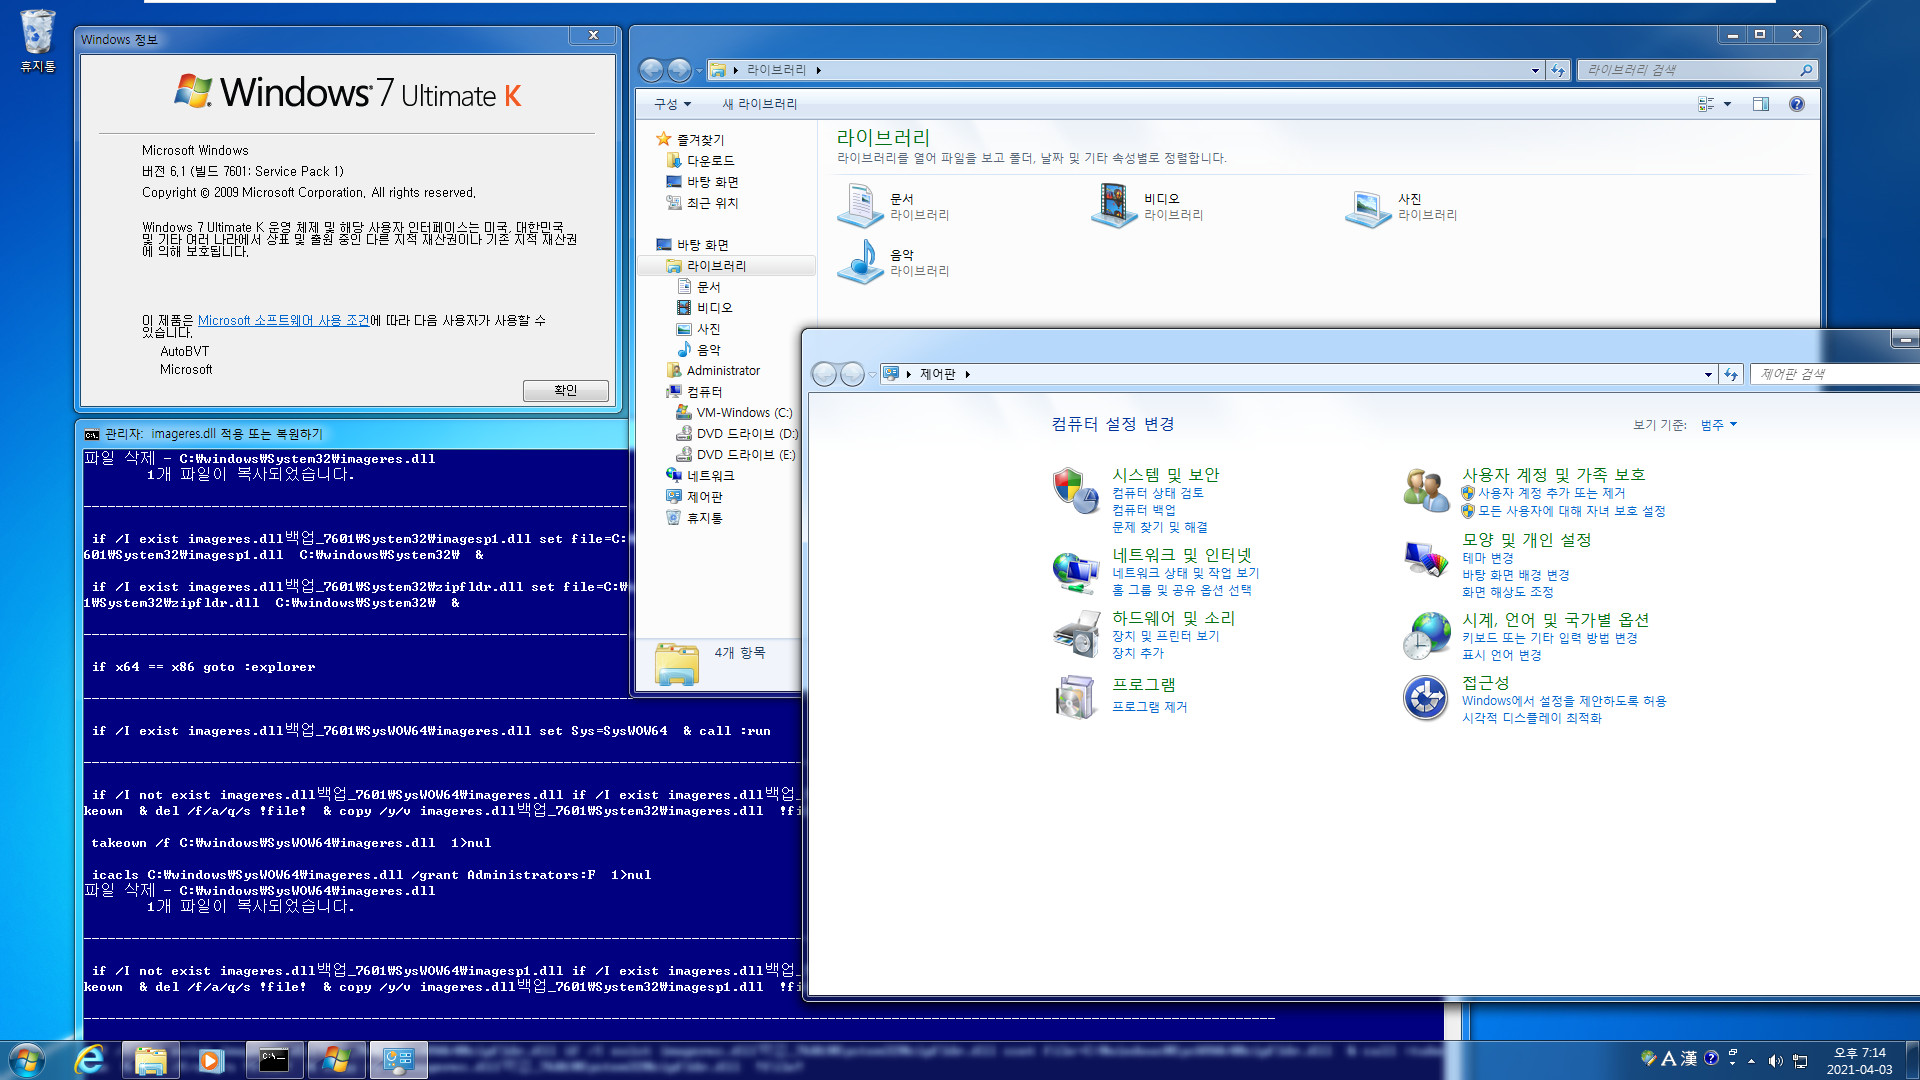 imageres.dll 윈도우 10 버전 1809와 윈도우 7 호환되도록 2가지 윈도우의 원본 imageres.dll을 합치고, 윈도우 7 라이브러리 안에 폴더 아이콘들 변경하여 테스트 2021-04-03_191405.jpg